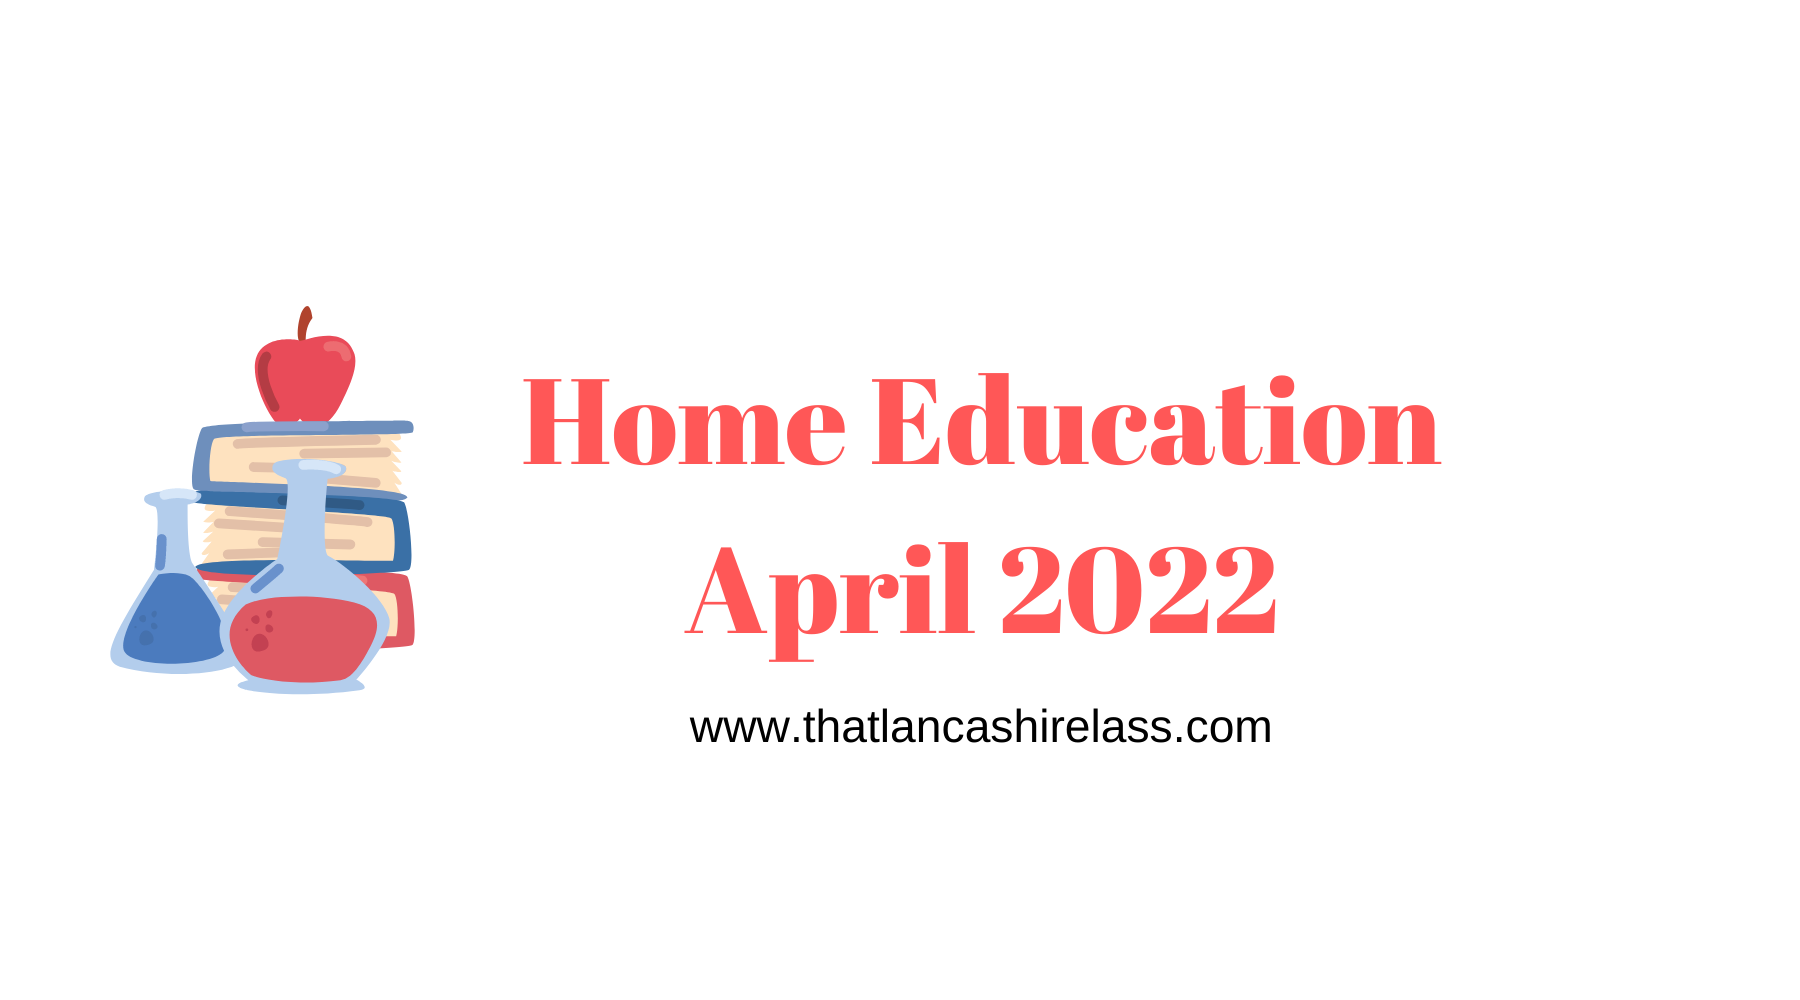 Home Education Plans for April